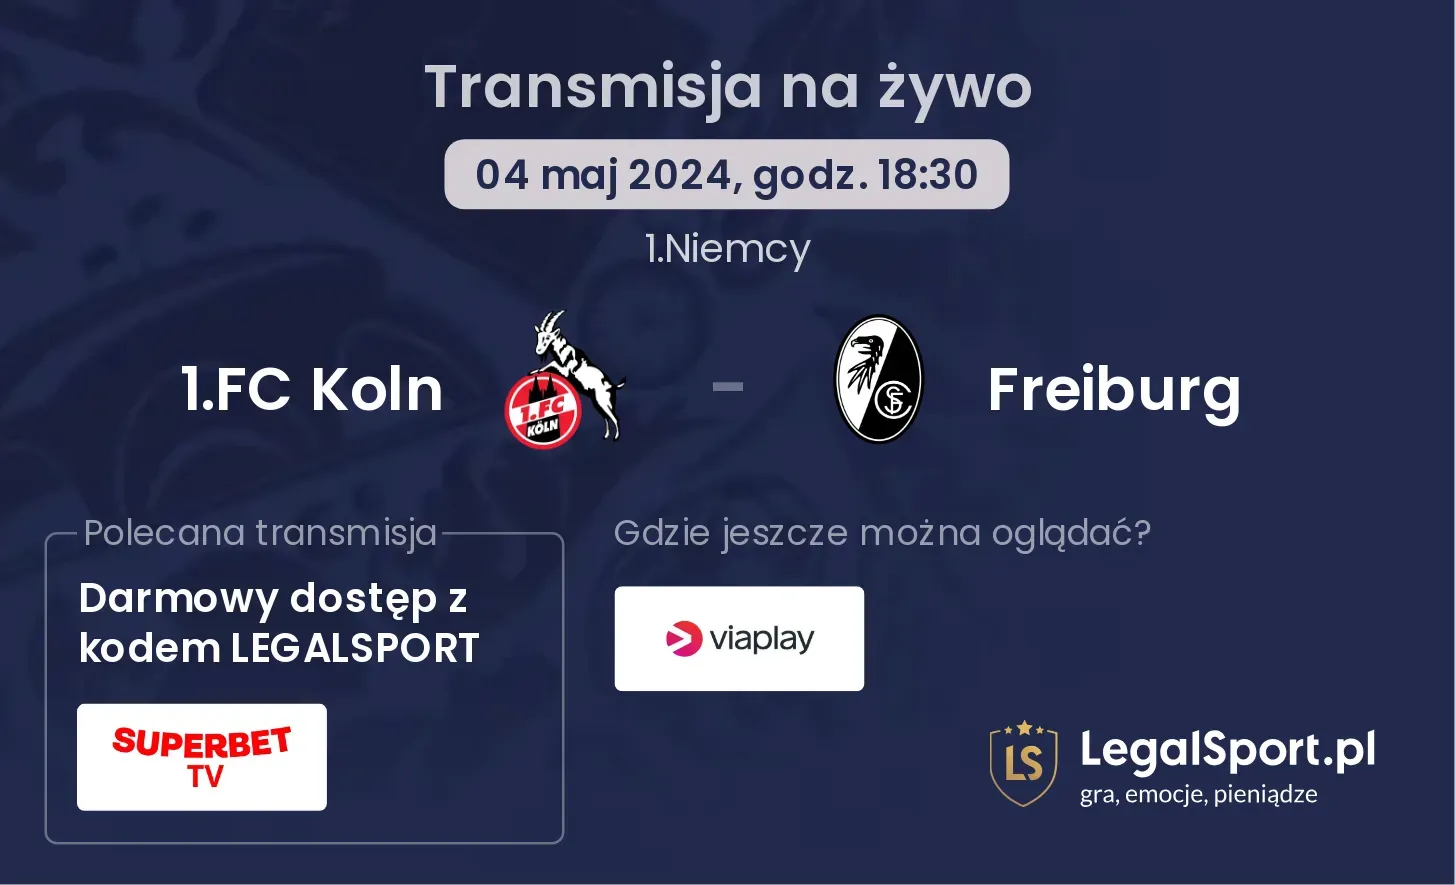 1.FC Koln - Freiburg transmisja na żywo